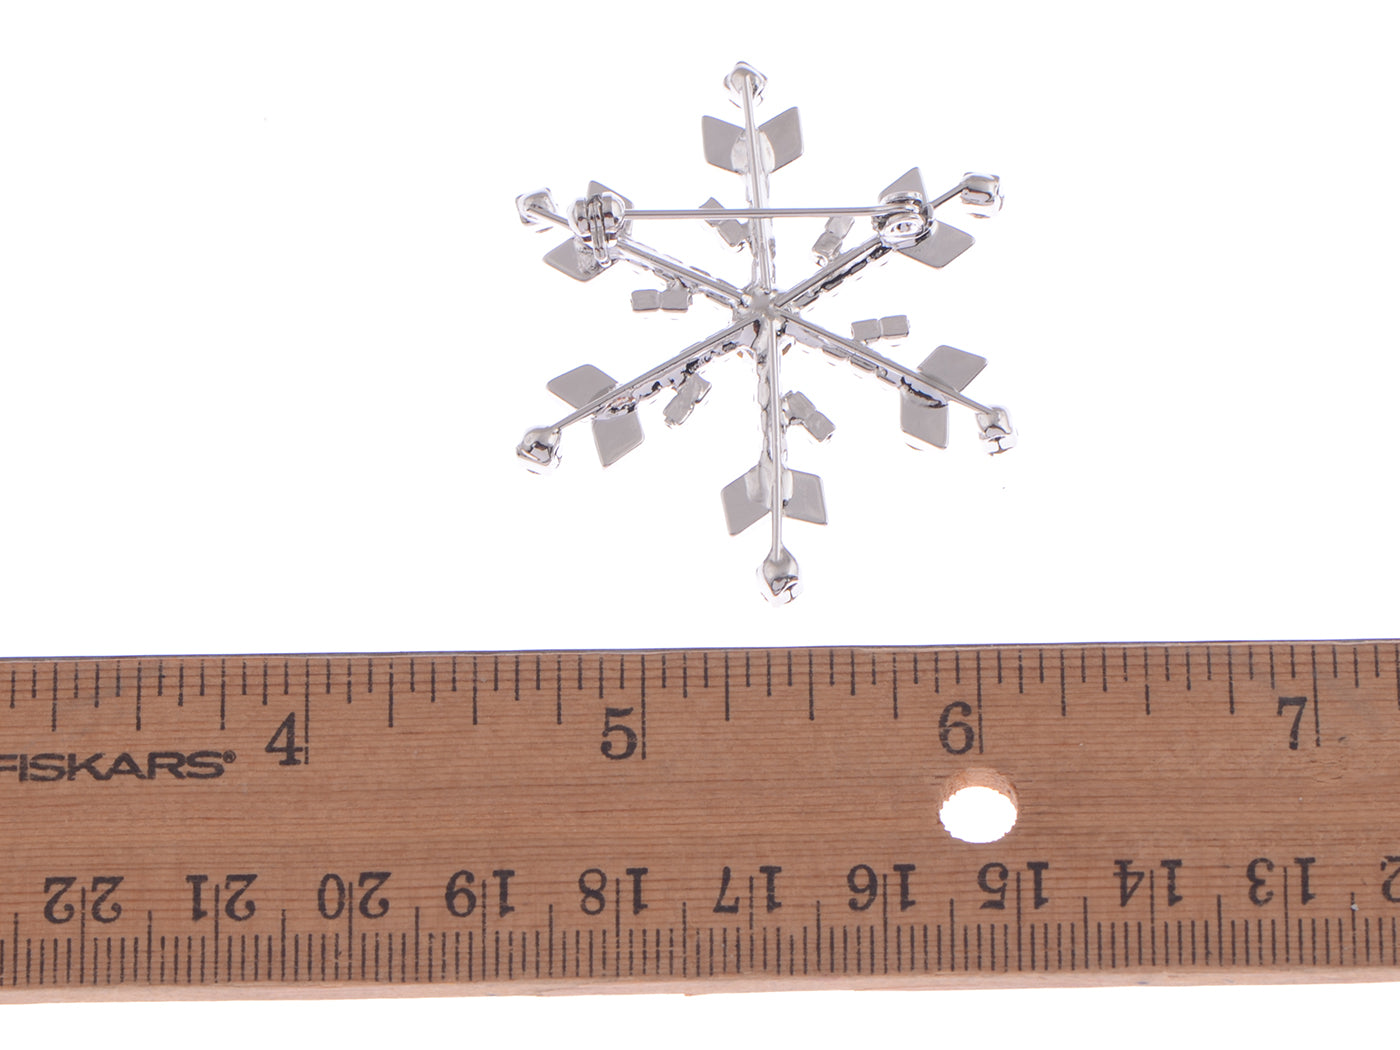 Shine Winter Snowflake Brooch Pin